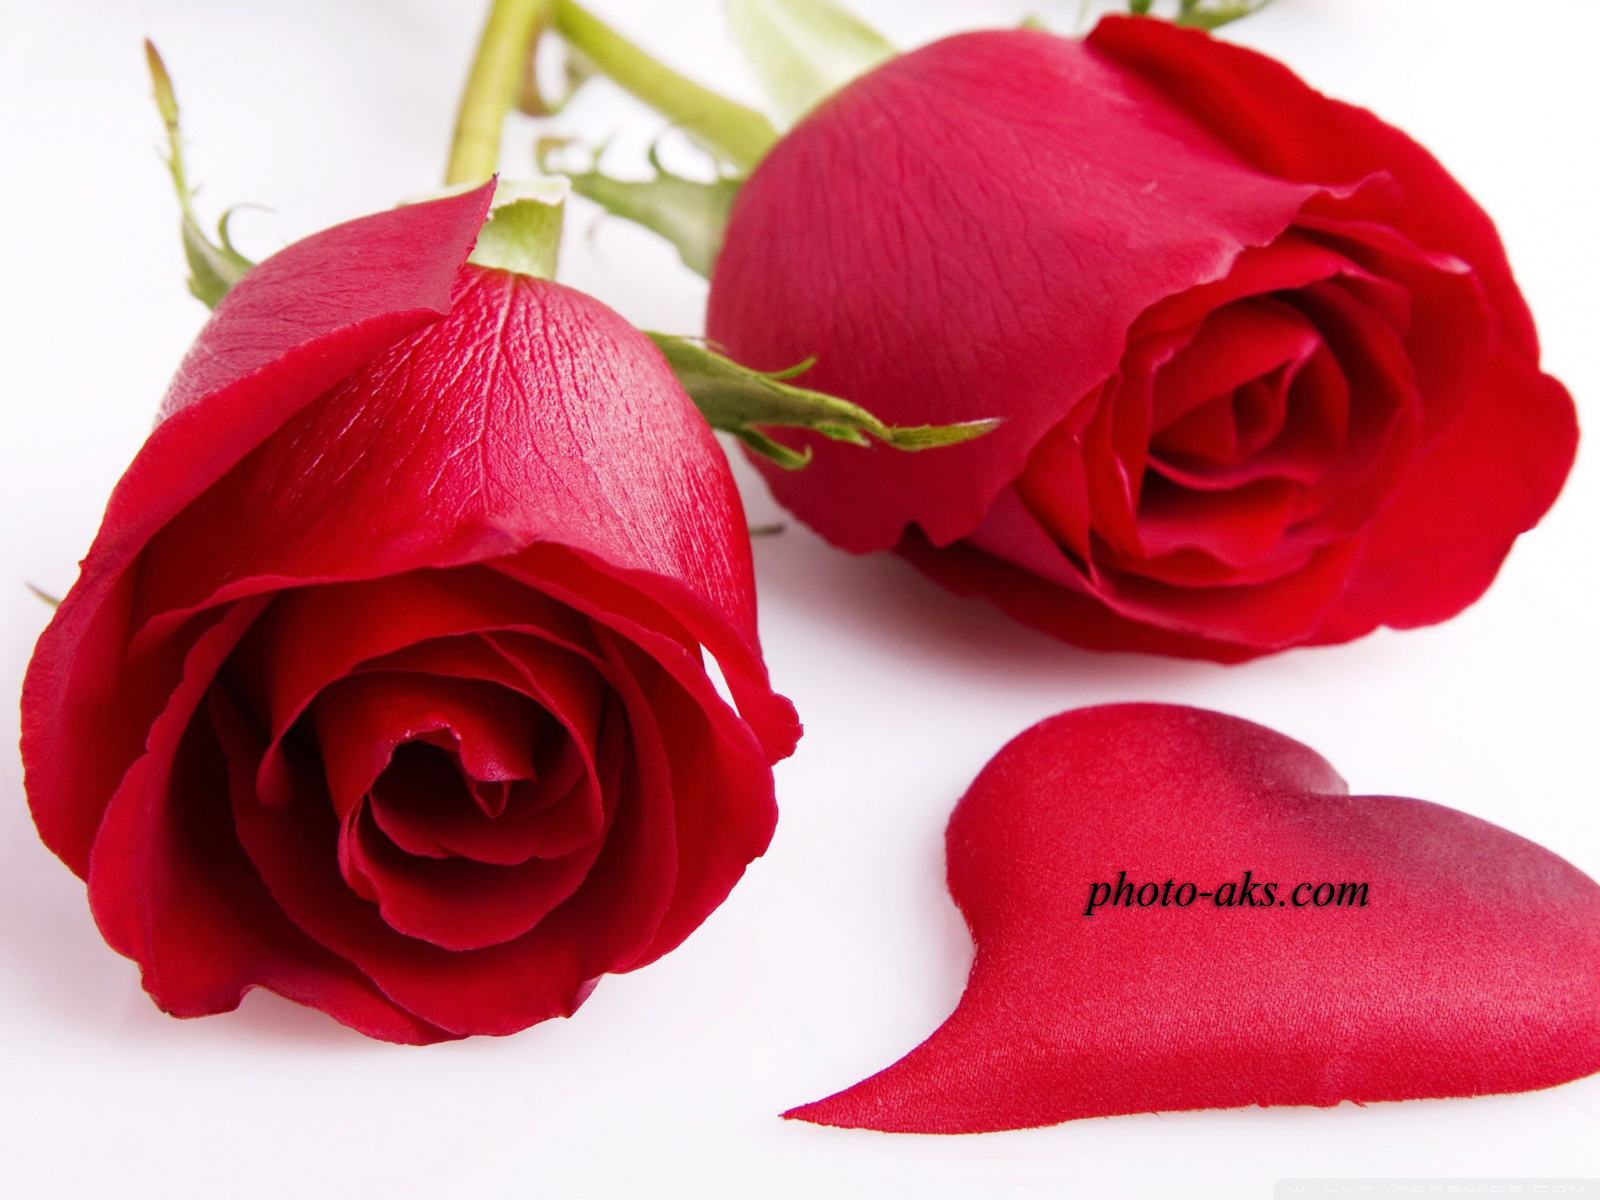 http://pic.photo-aks.com/photo/nature/flowers/rose/large/red_roses(photo-aks.com).jpg